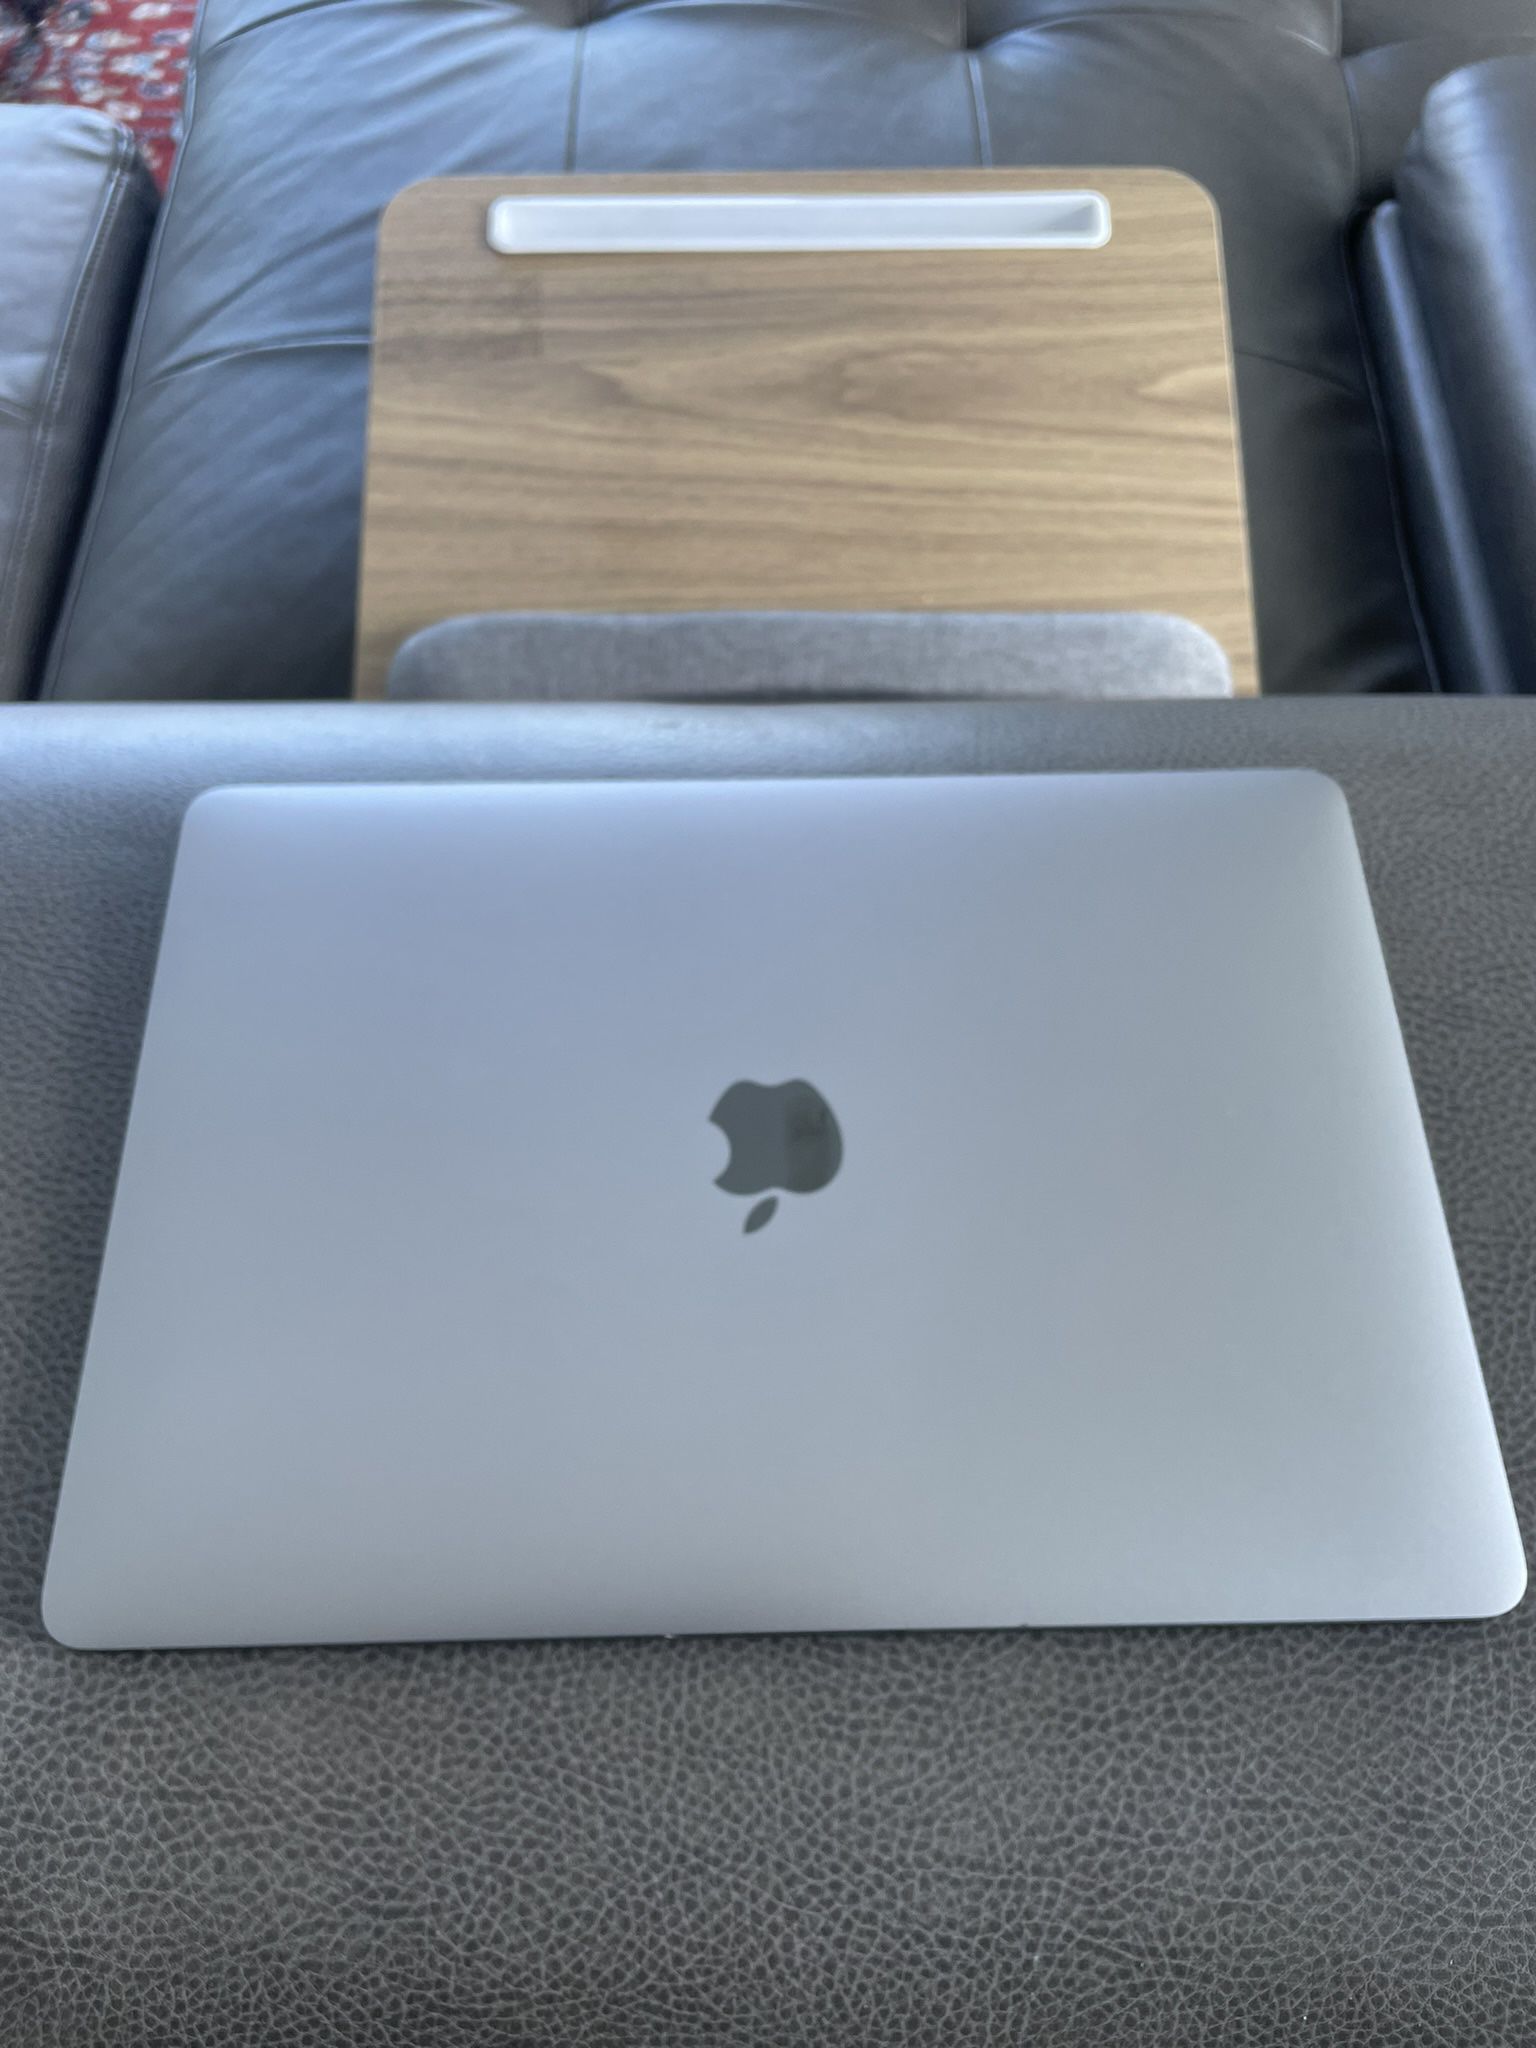 Brand New 2018 MacBook Pro 13in